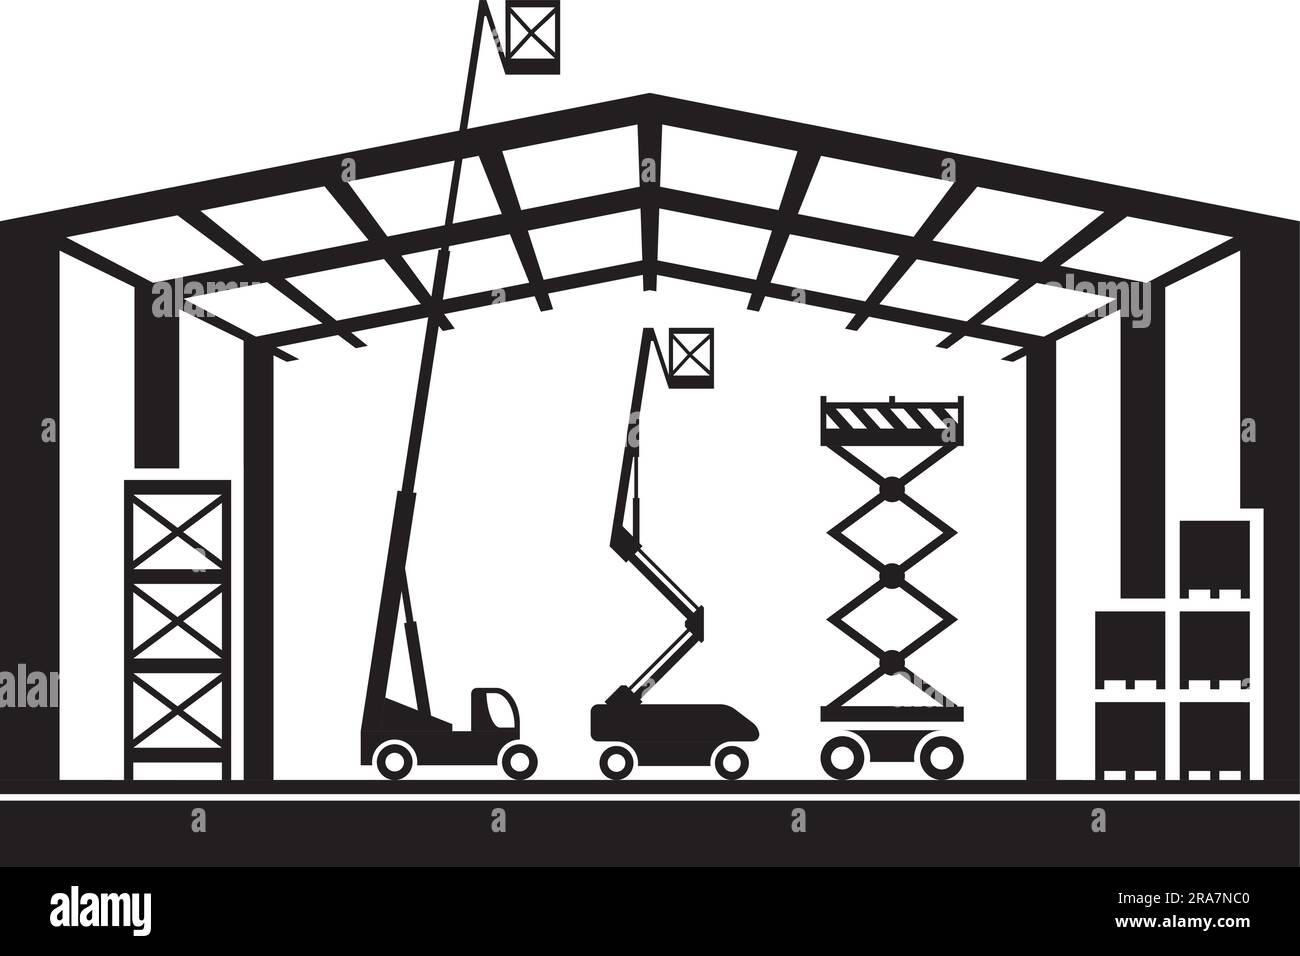 Construction lifting machinery - vector illustration Stock Vector